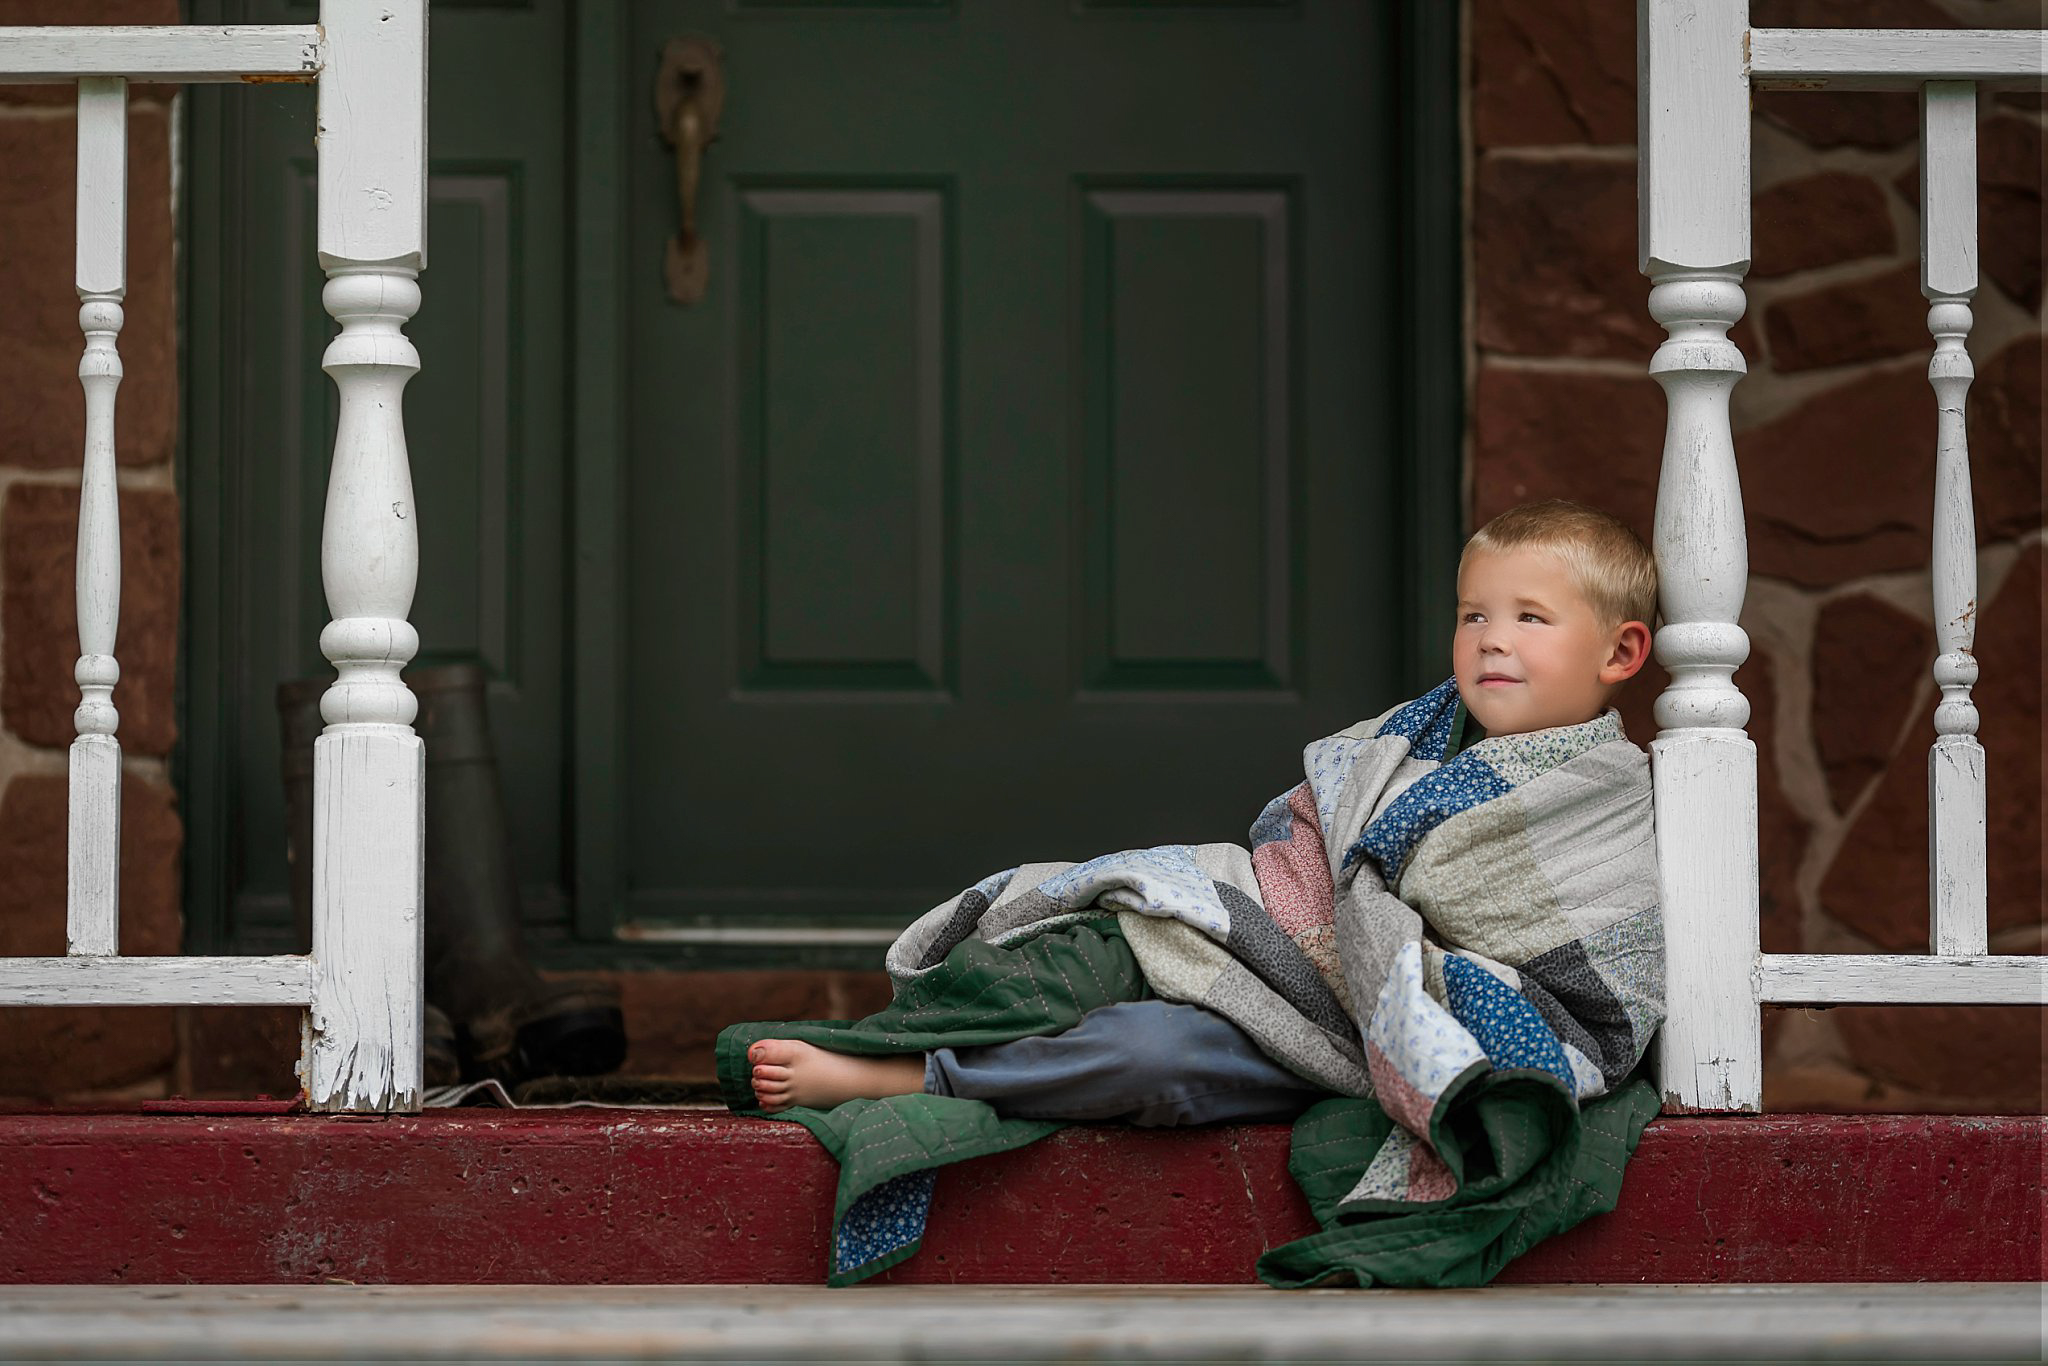 Developing Cozy, boy in blanket on porch